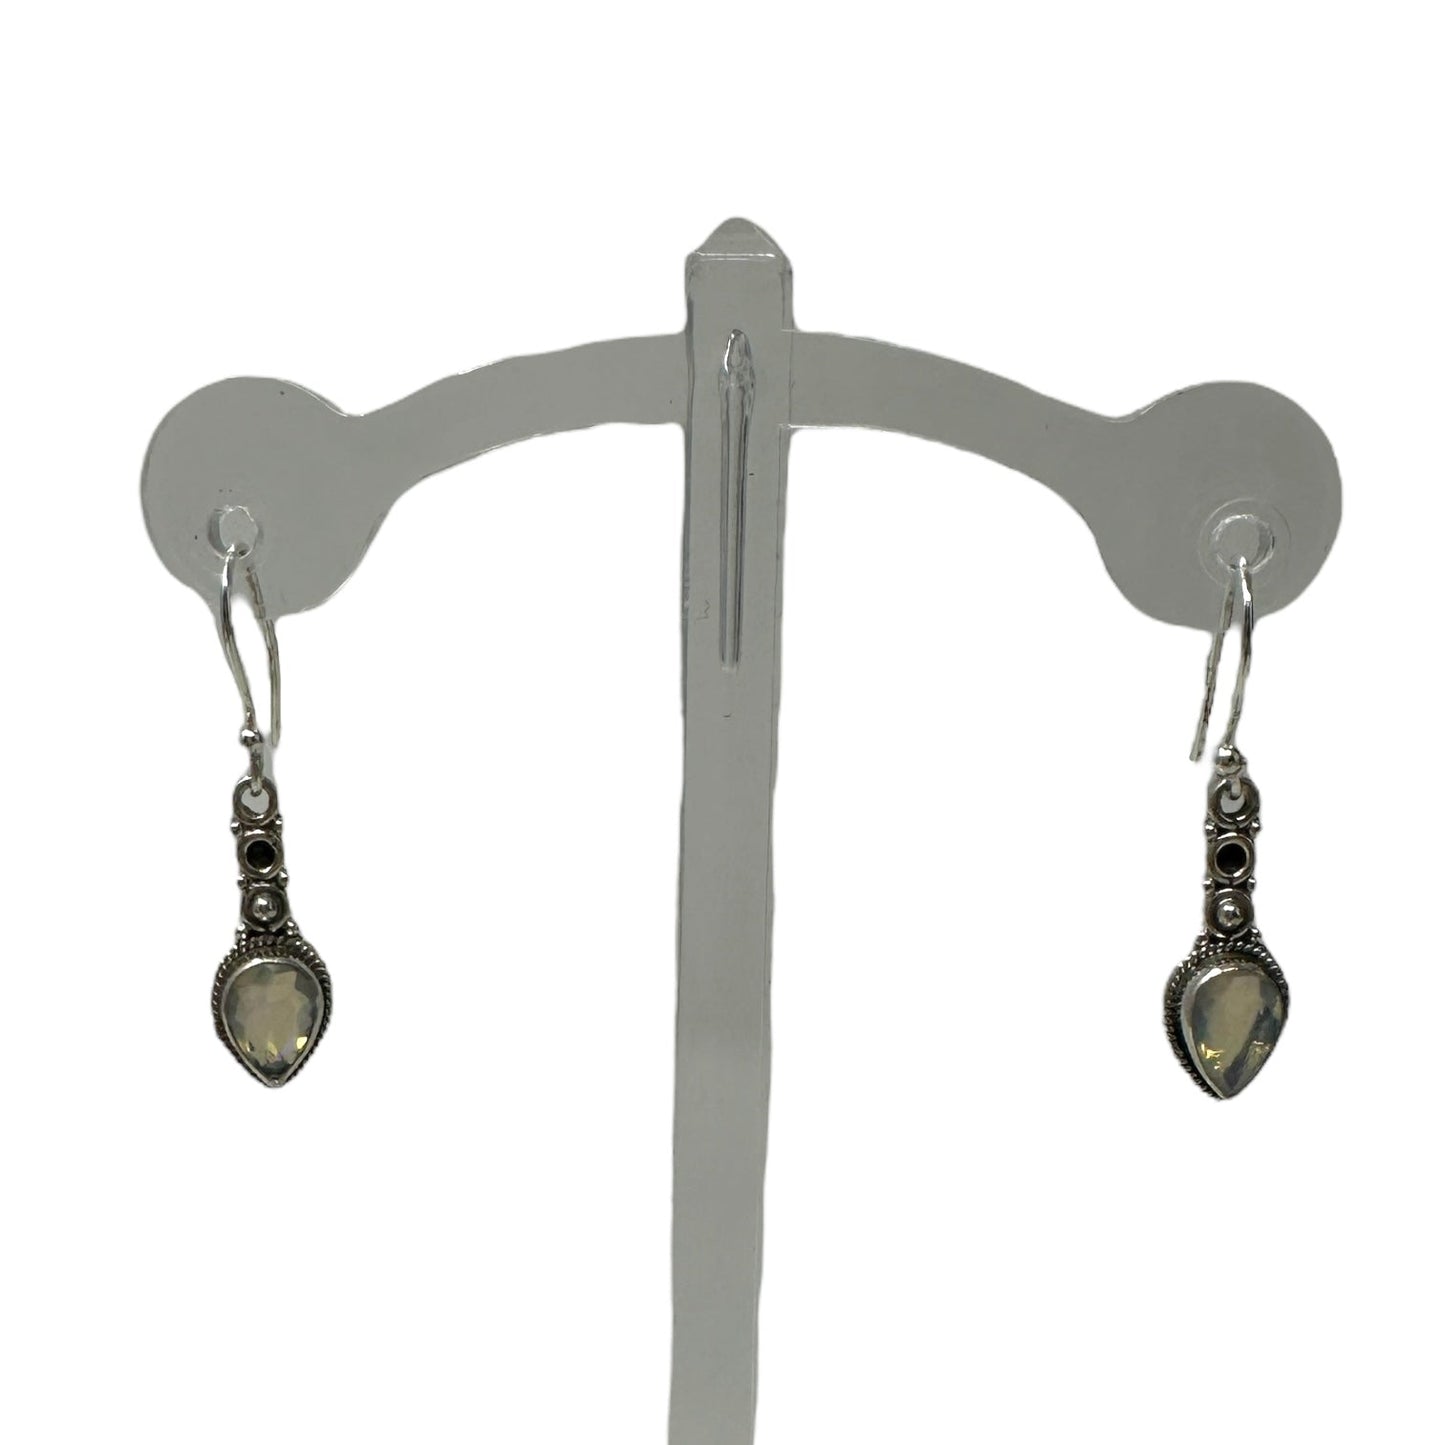 Moonstone & Sterling Silver Dangle Earrings